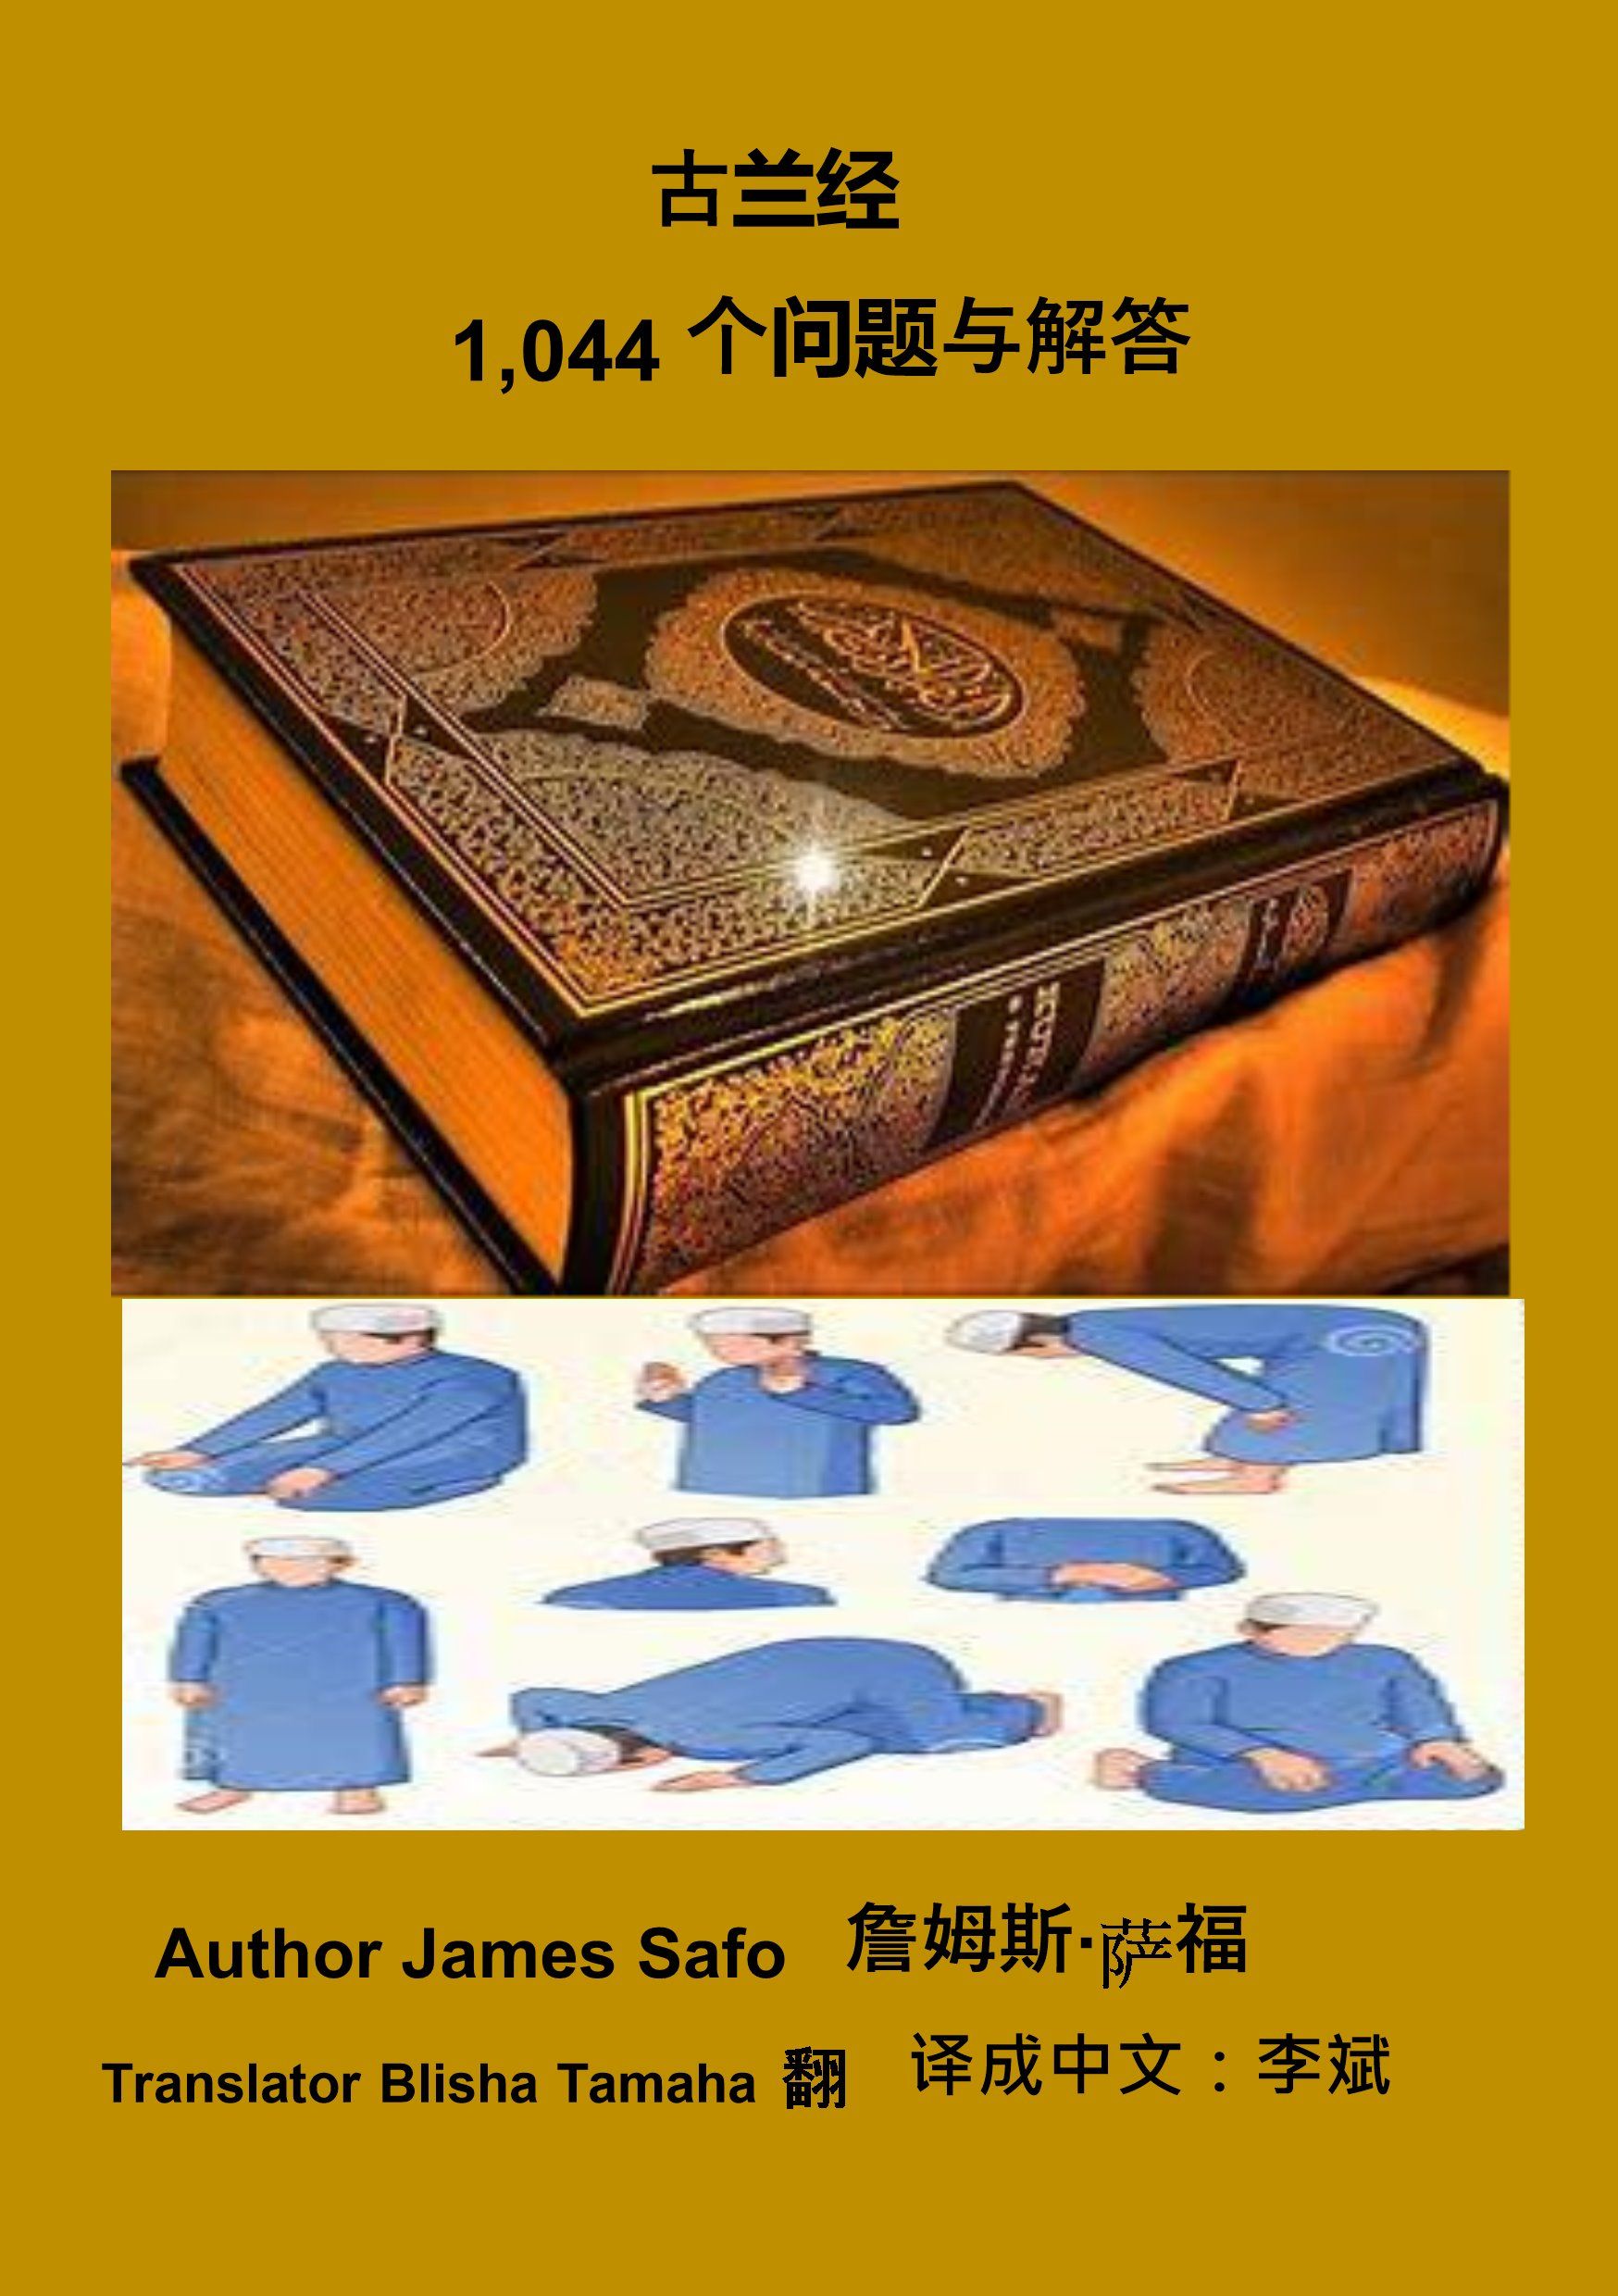 New islam book